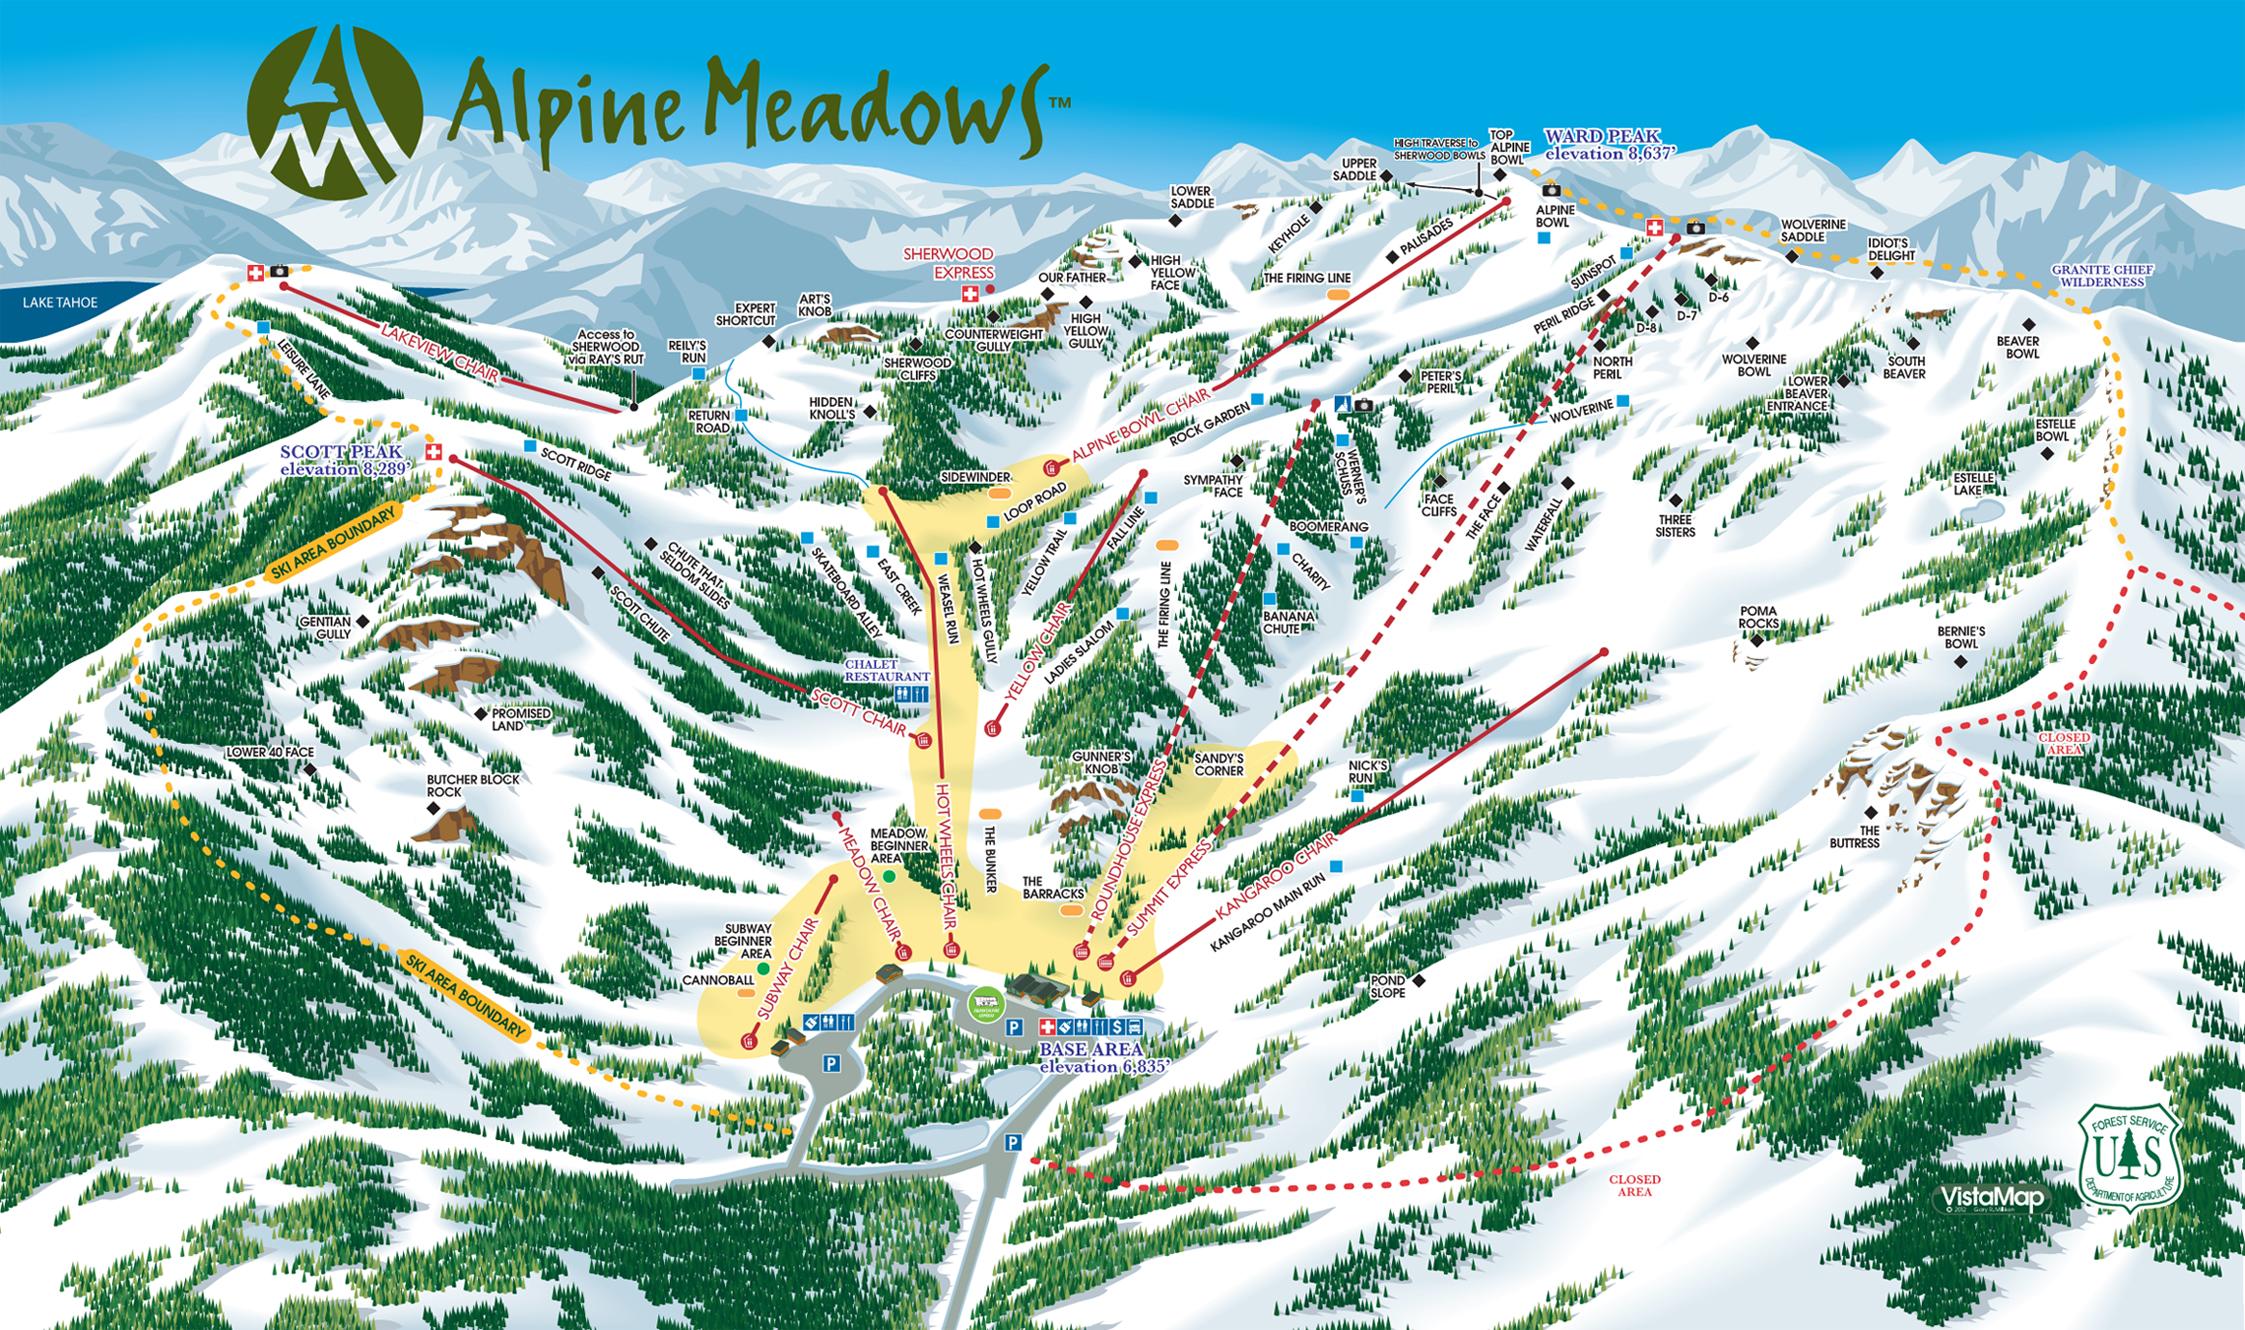 Alpine Meadows - The Frontside